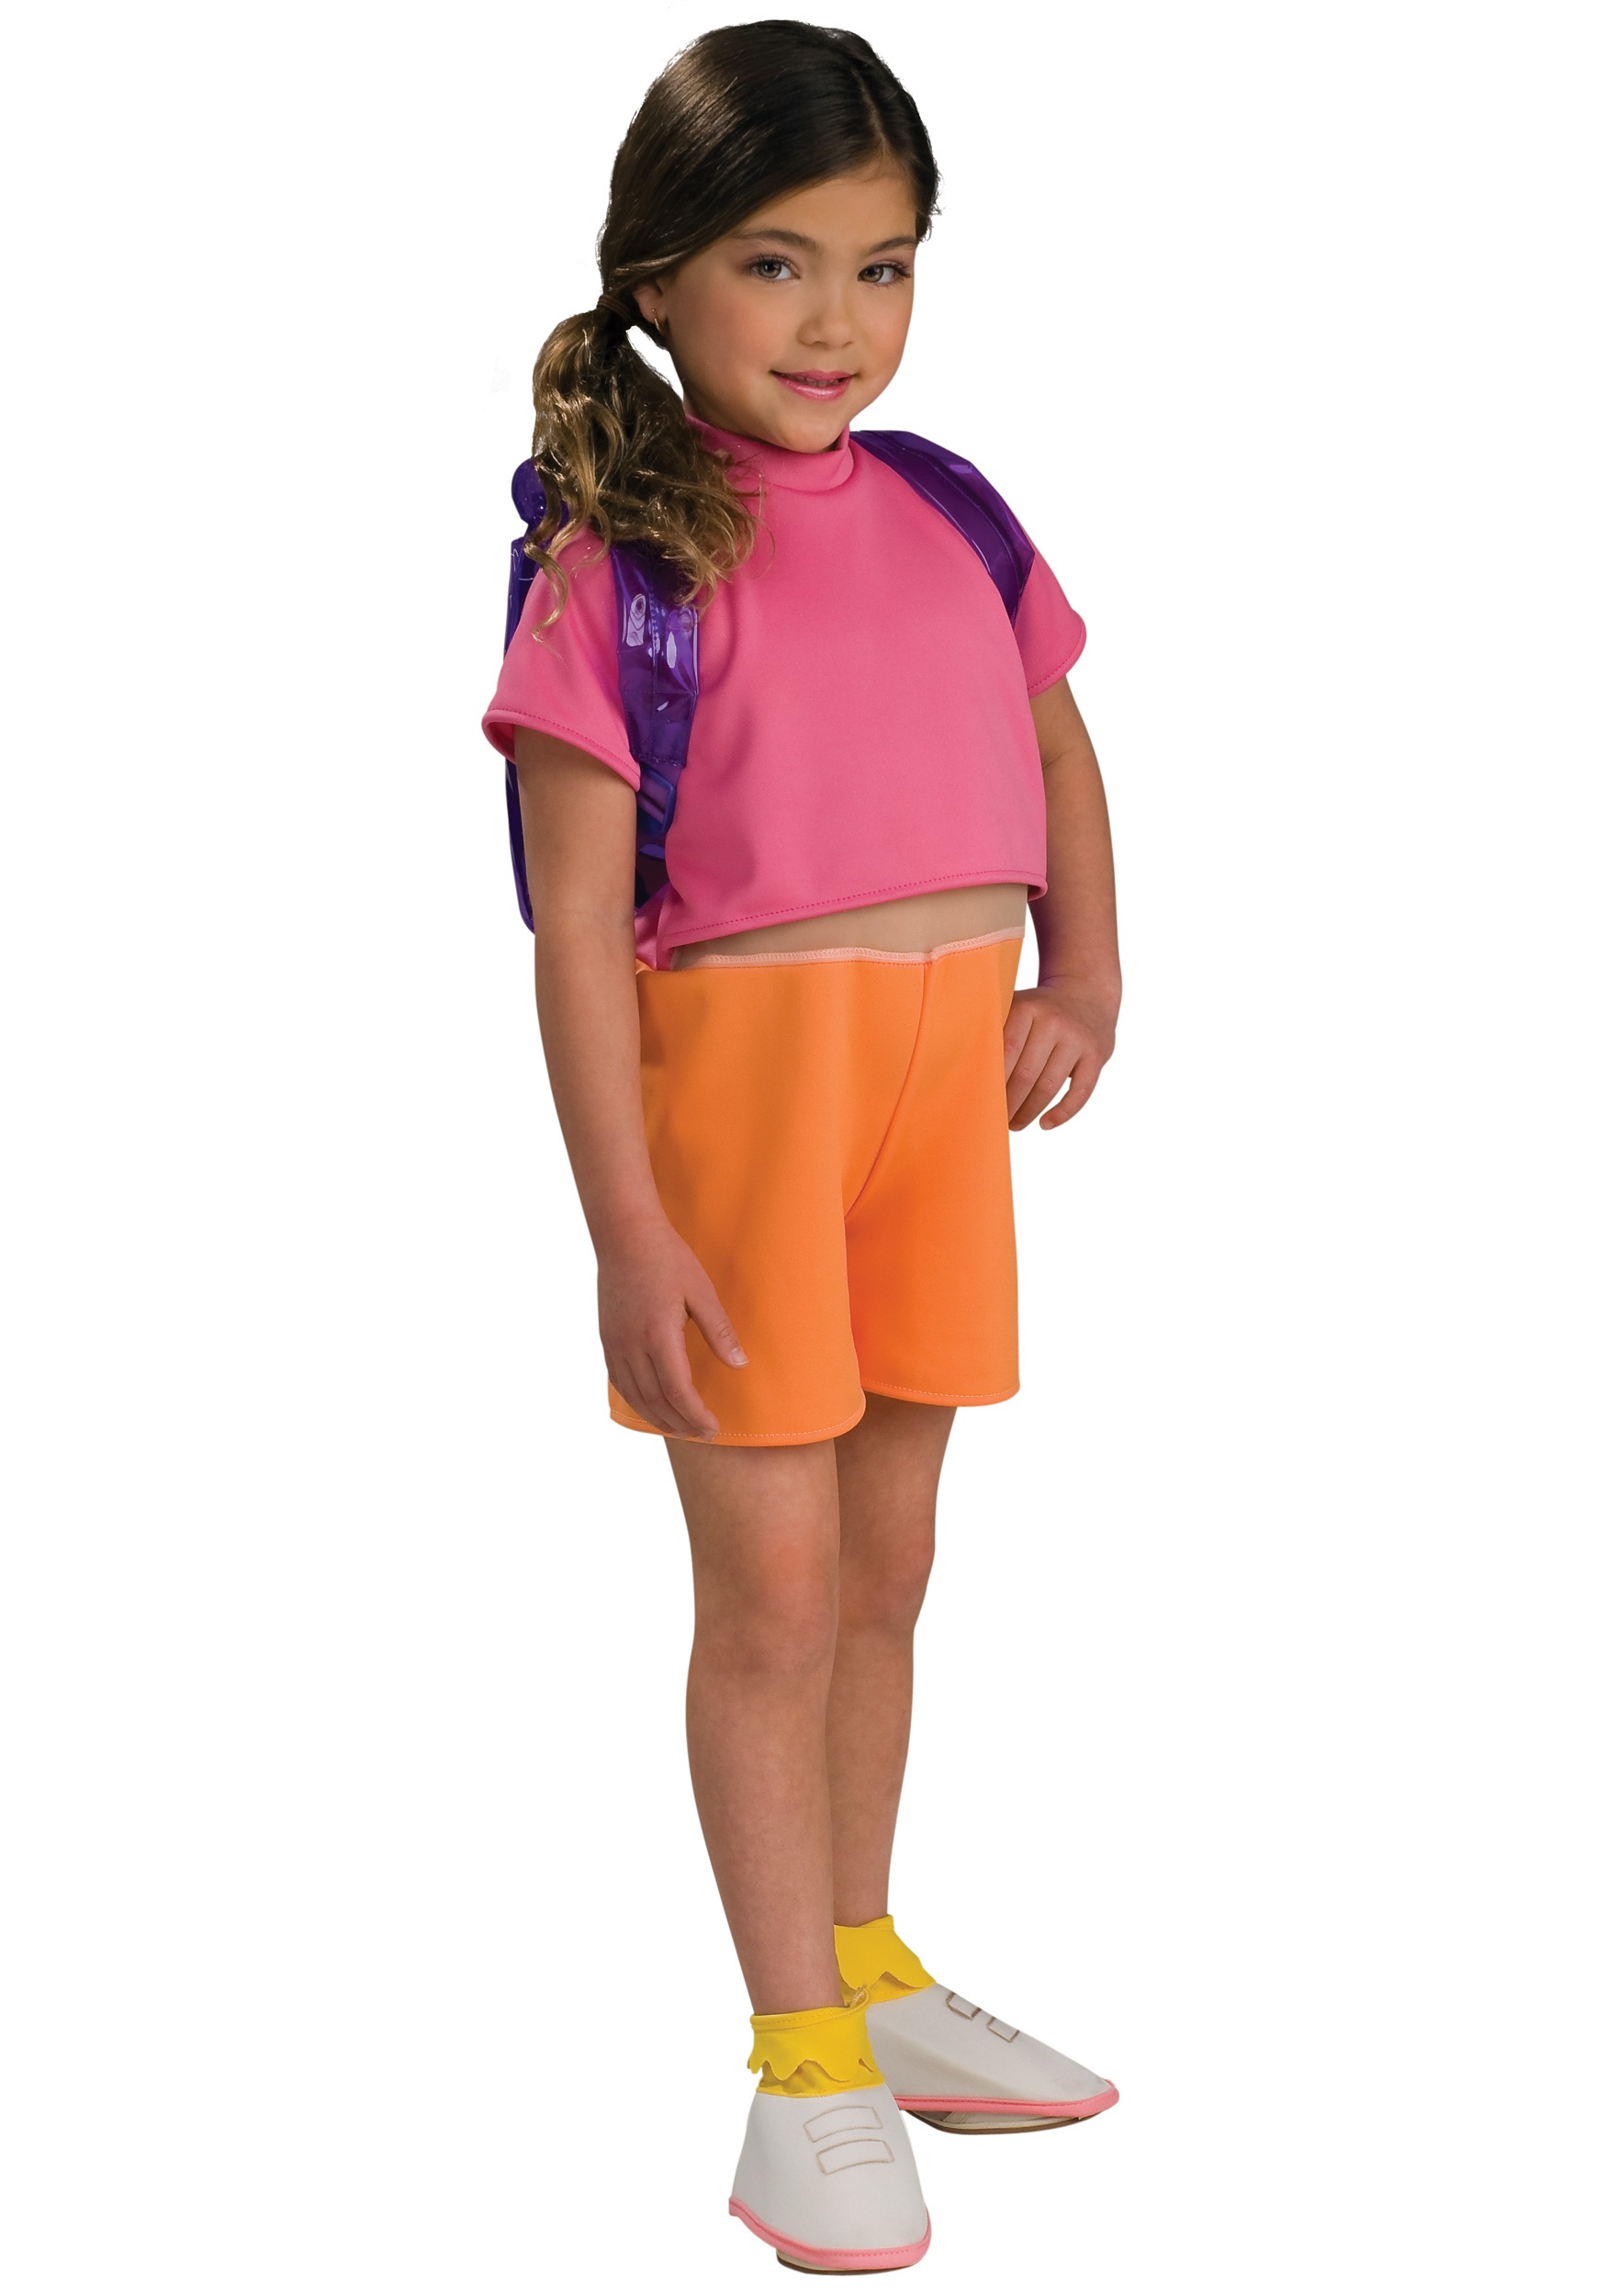 Dora the Explorer Costume.